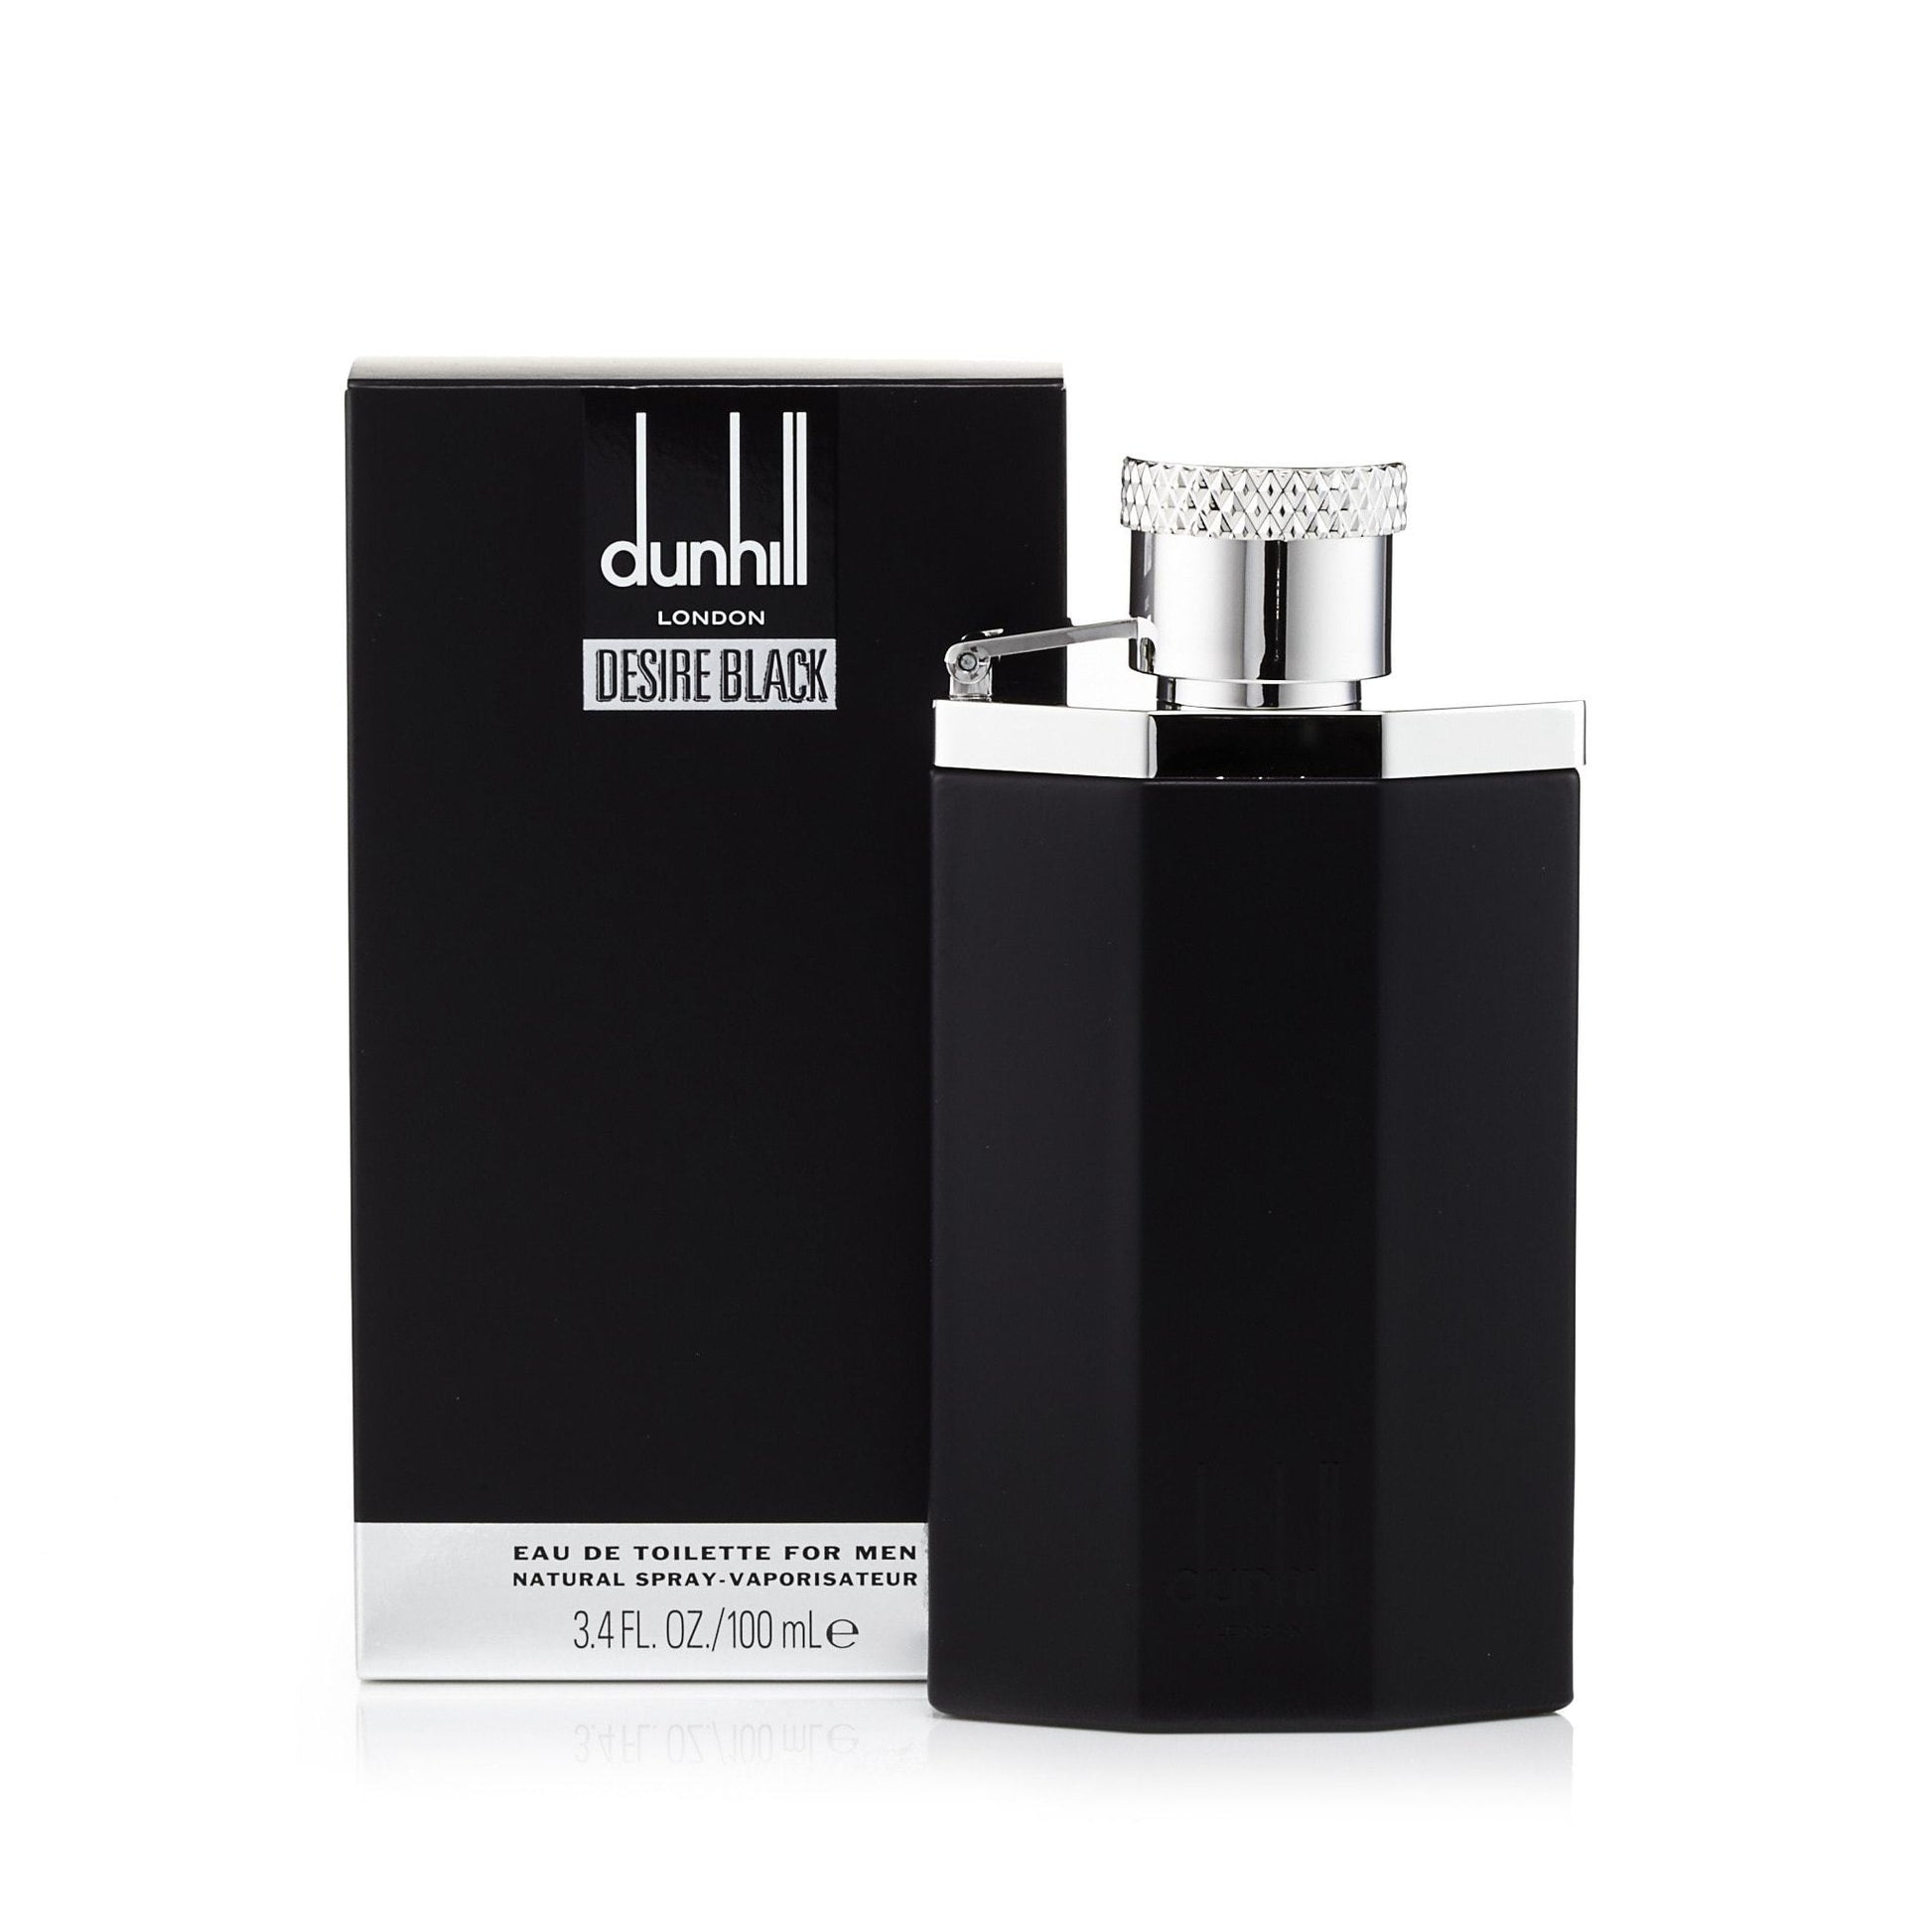 Desire Black London Eau de Toilette Spray for Men by Alfred Dunhill, Product image 2